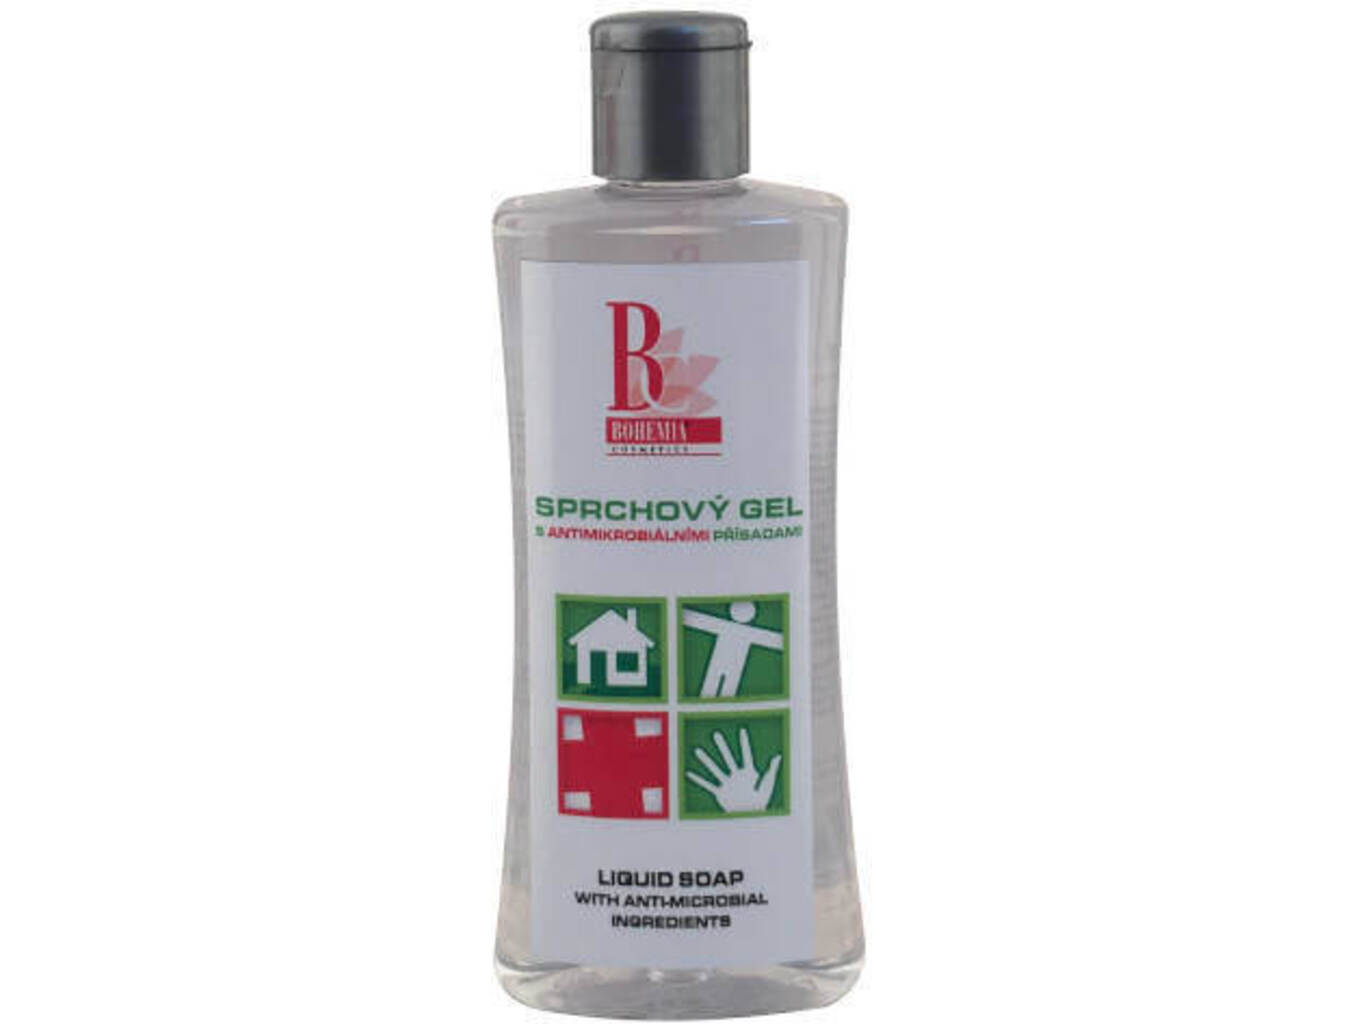 Bohemia Cosmetics sprchový gel s antimikrobiálními přísadami 250 ml